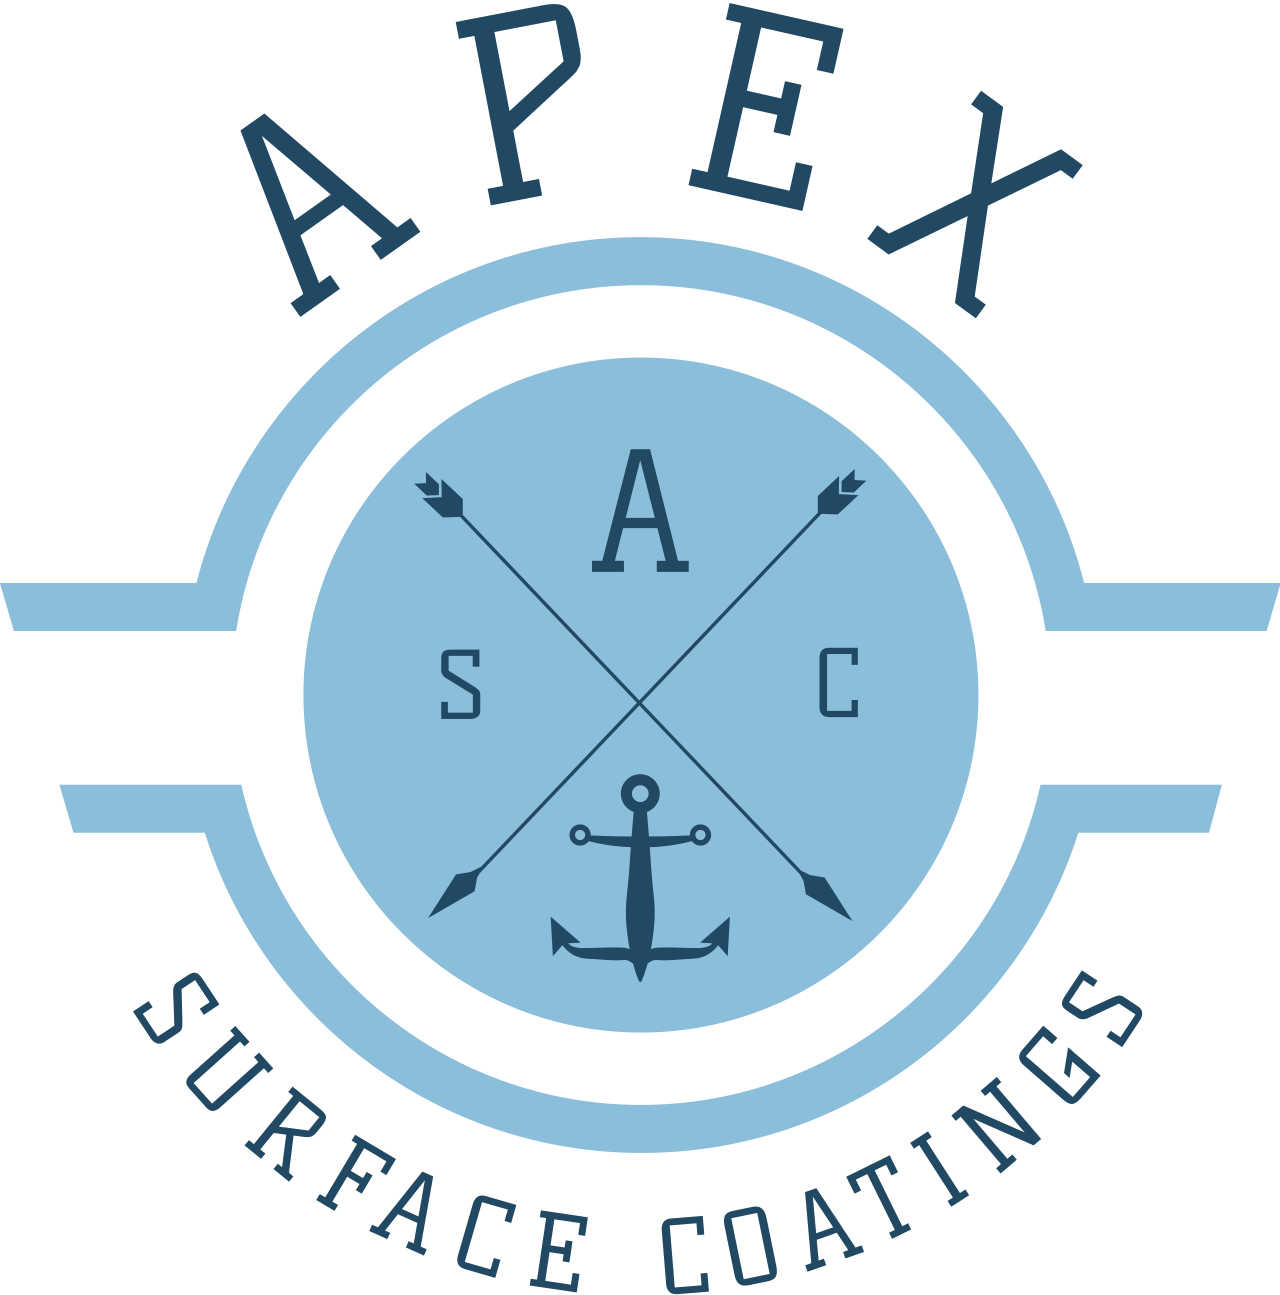 APEX's logo